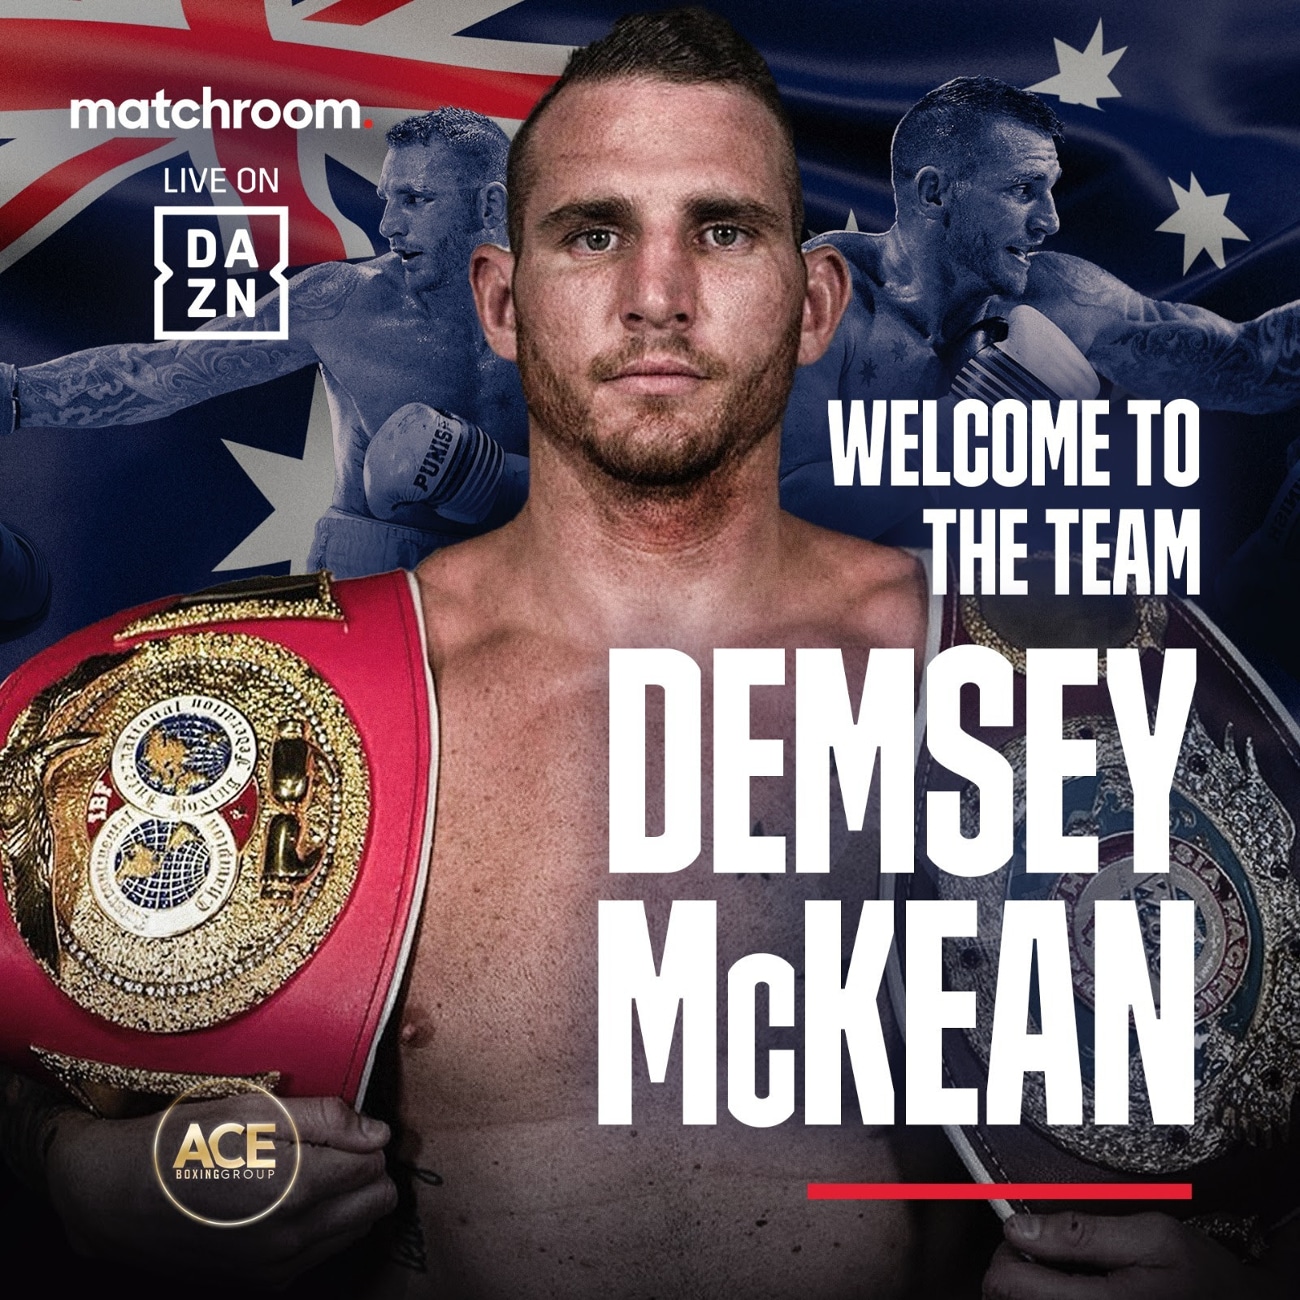 Demsey McKean boxing image / photo